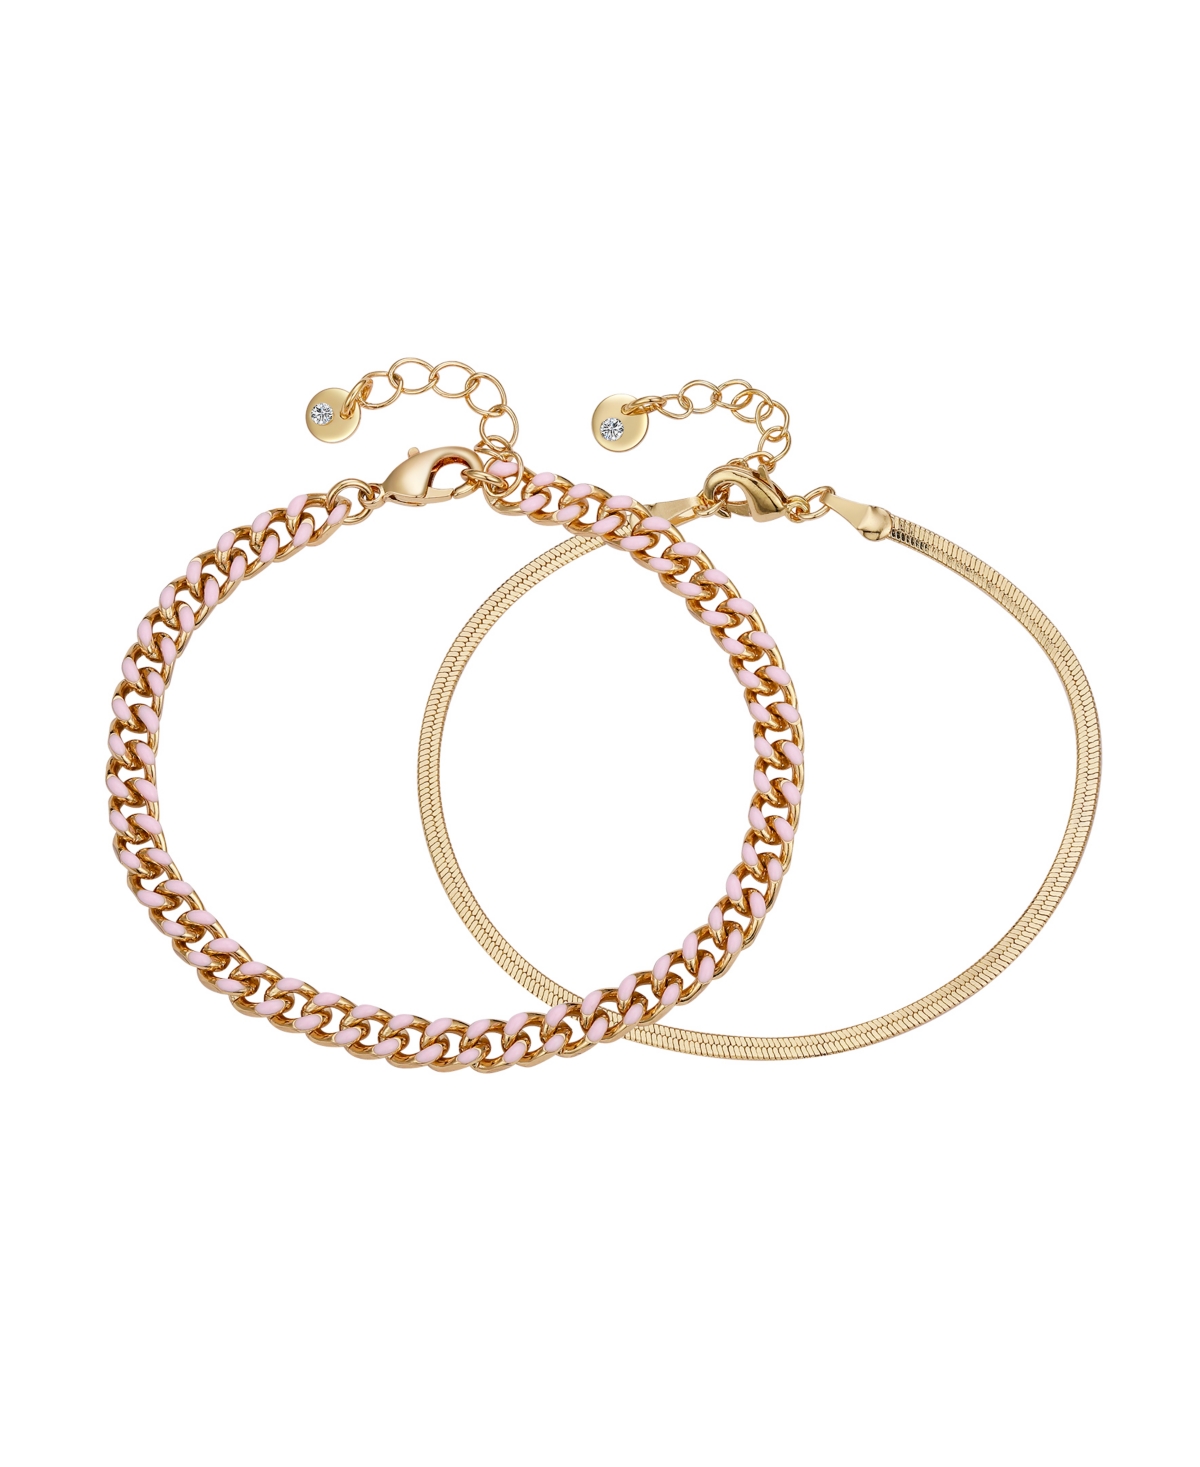 Unwritten 14k Gold Flash-plated Light Pink Enamel Curb Chain And Herringbone Chain Bracelet Set